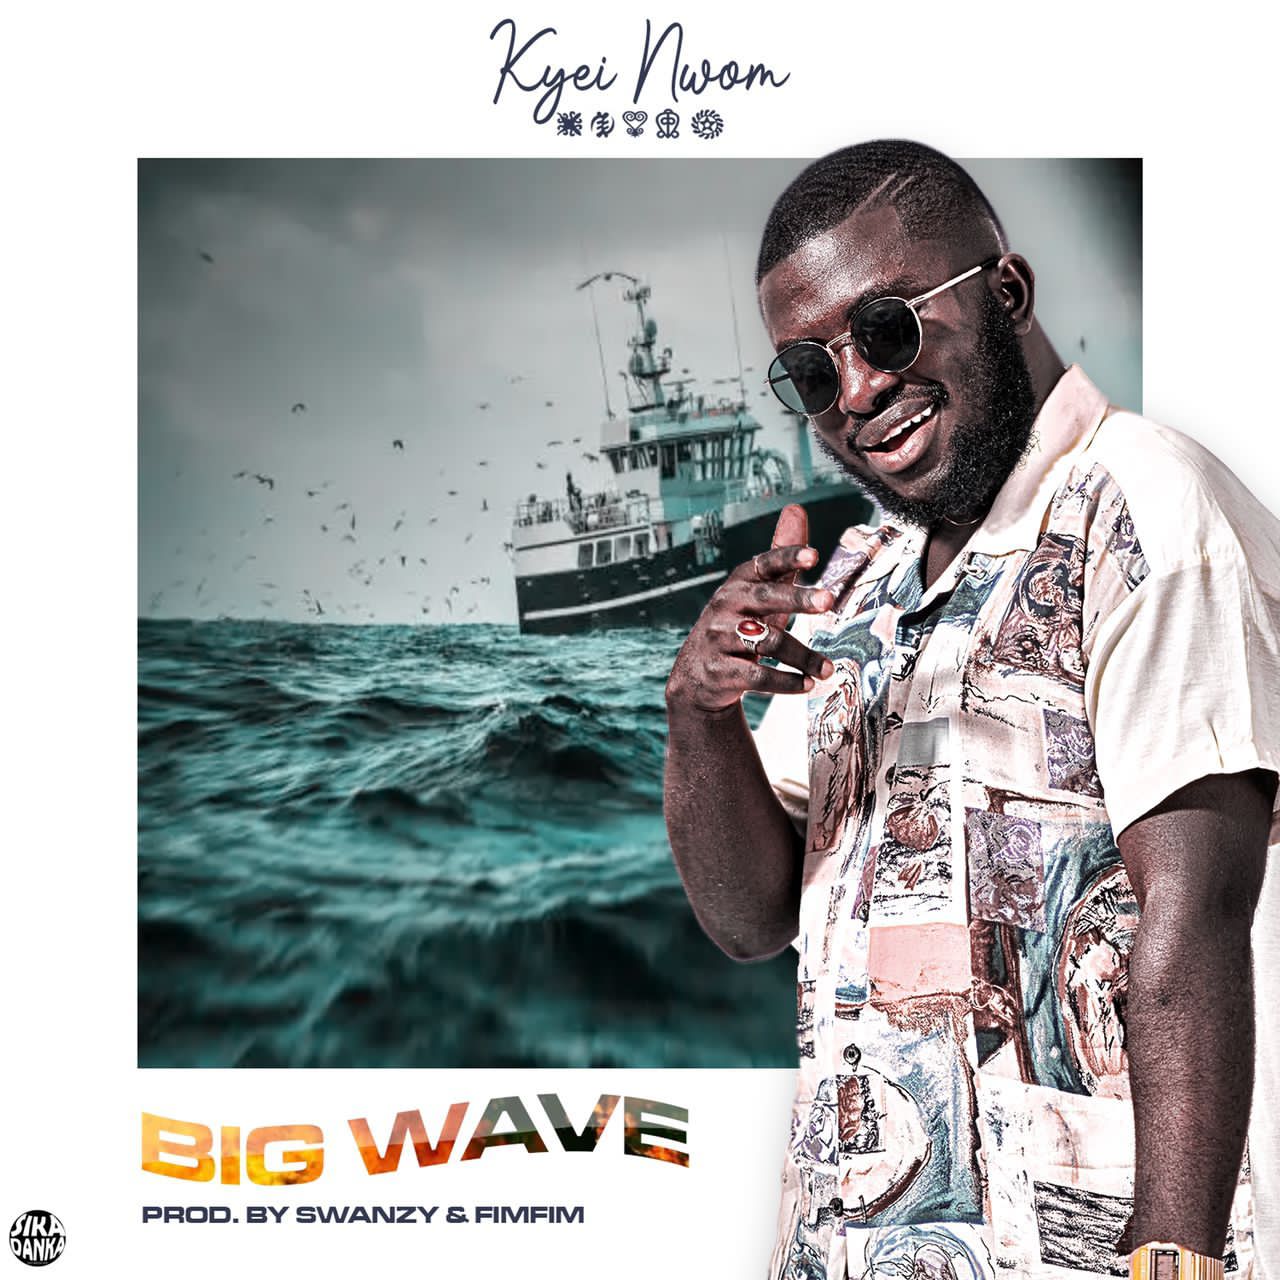 Kyei Nwom drops a new ‘Big wave’